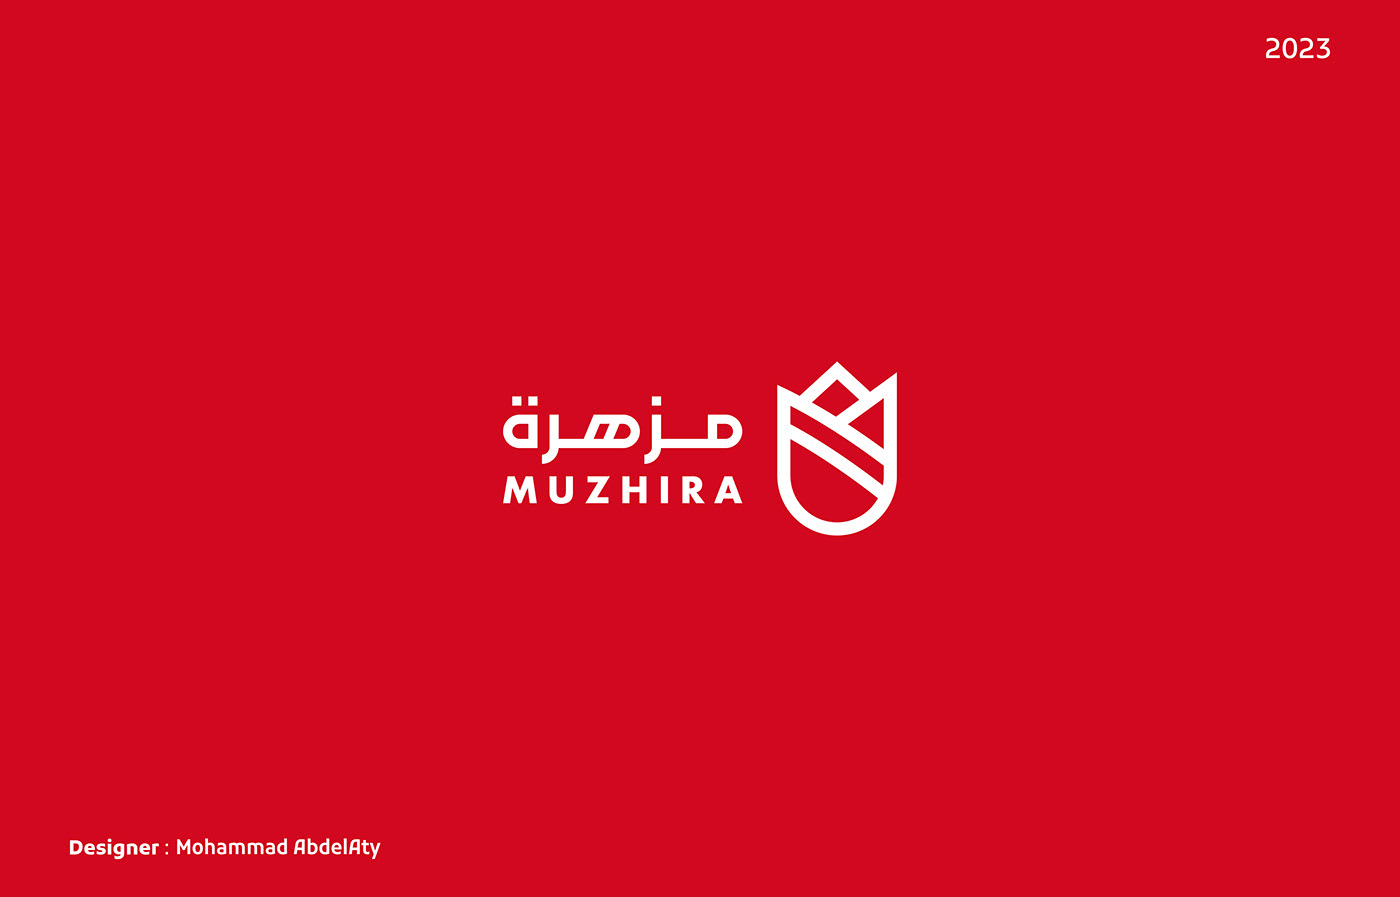 logo gaza arabic logos Logotype logofolio 2023 palestine brand identity marks アンネローゼ